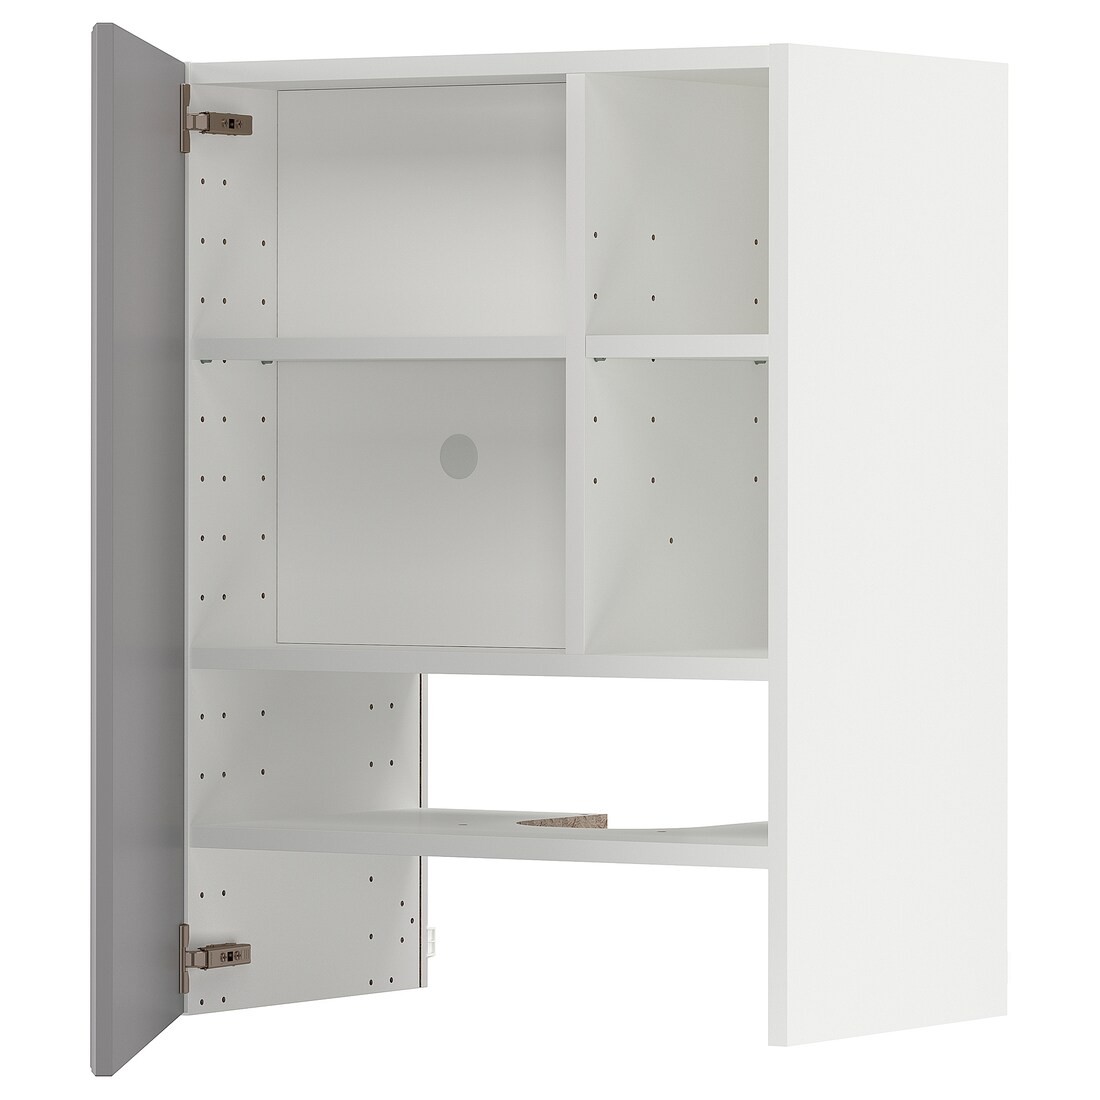 IKEA METOD МЕТОД Навесной шкаф с полкой / дверью, белый / Bodbyn серый 59504485 | 595.044.85